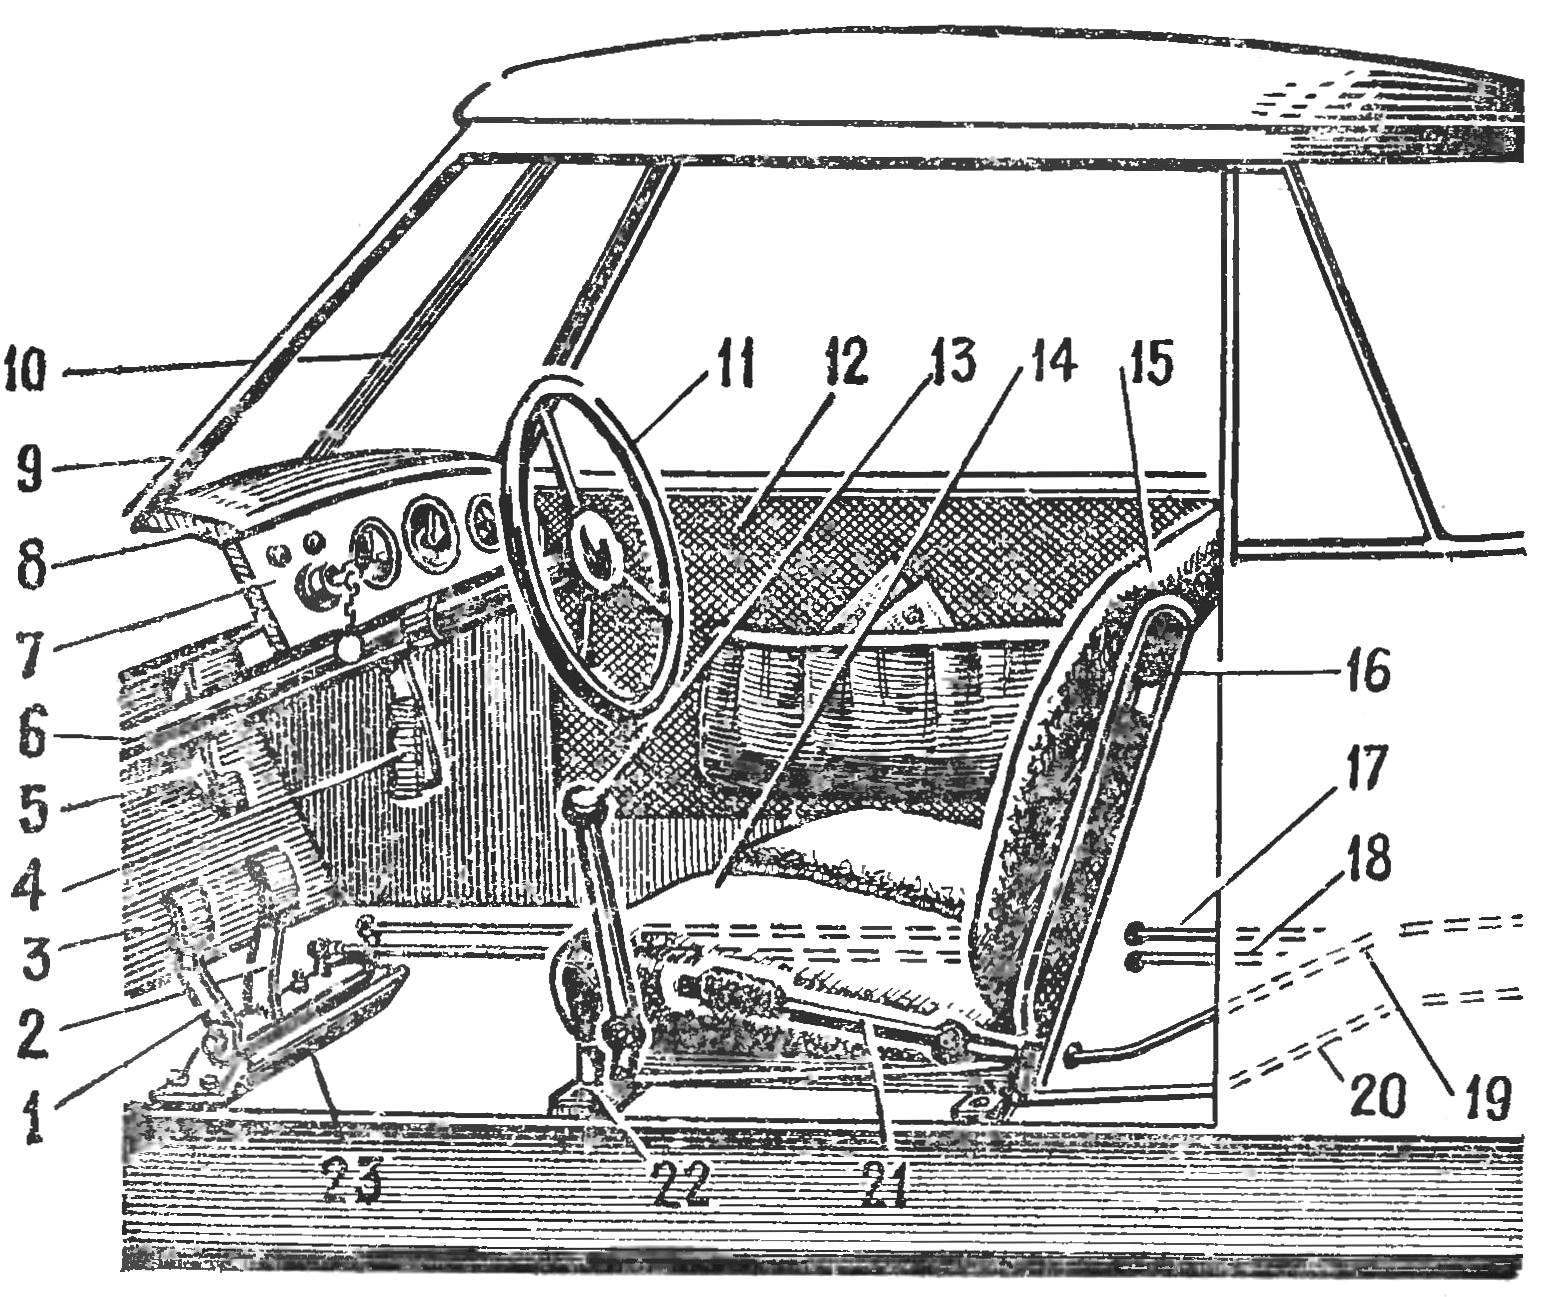 Fig. 9. Salon equipment